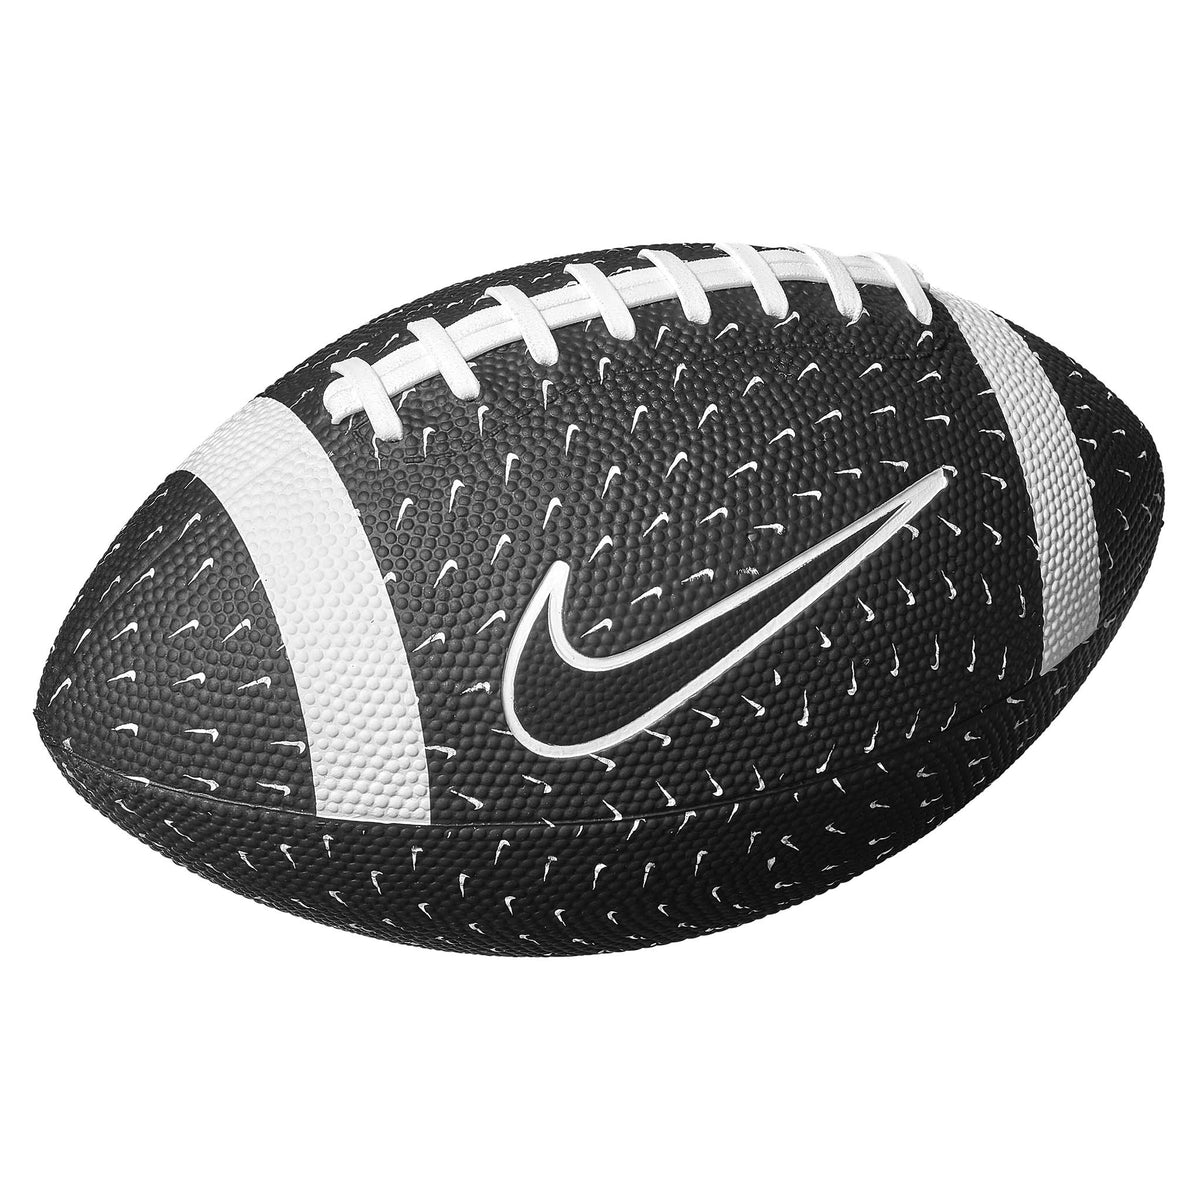 Nike Playground FB ballon de football américain noir blanc